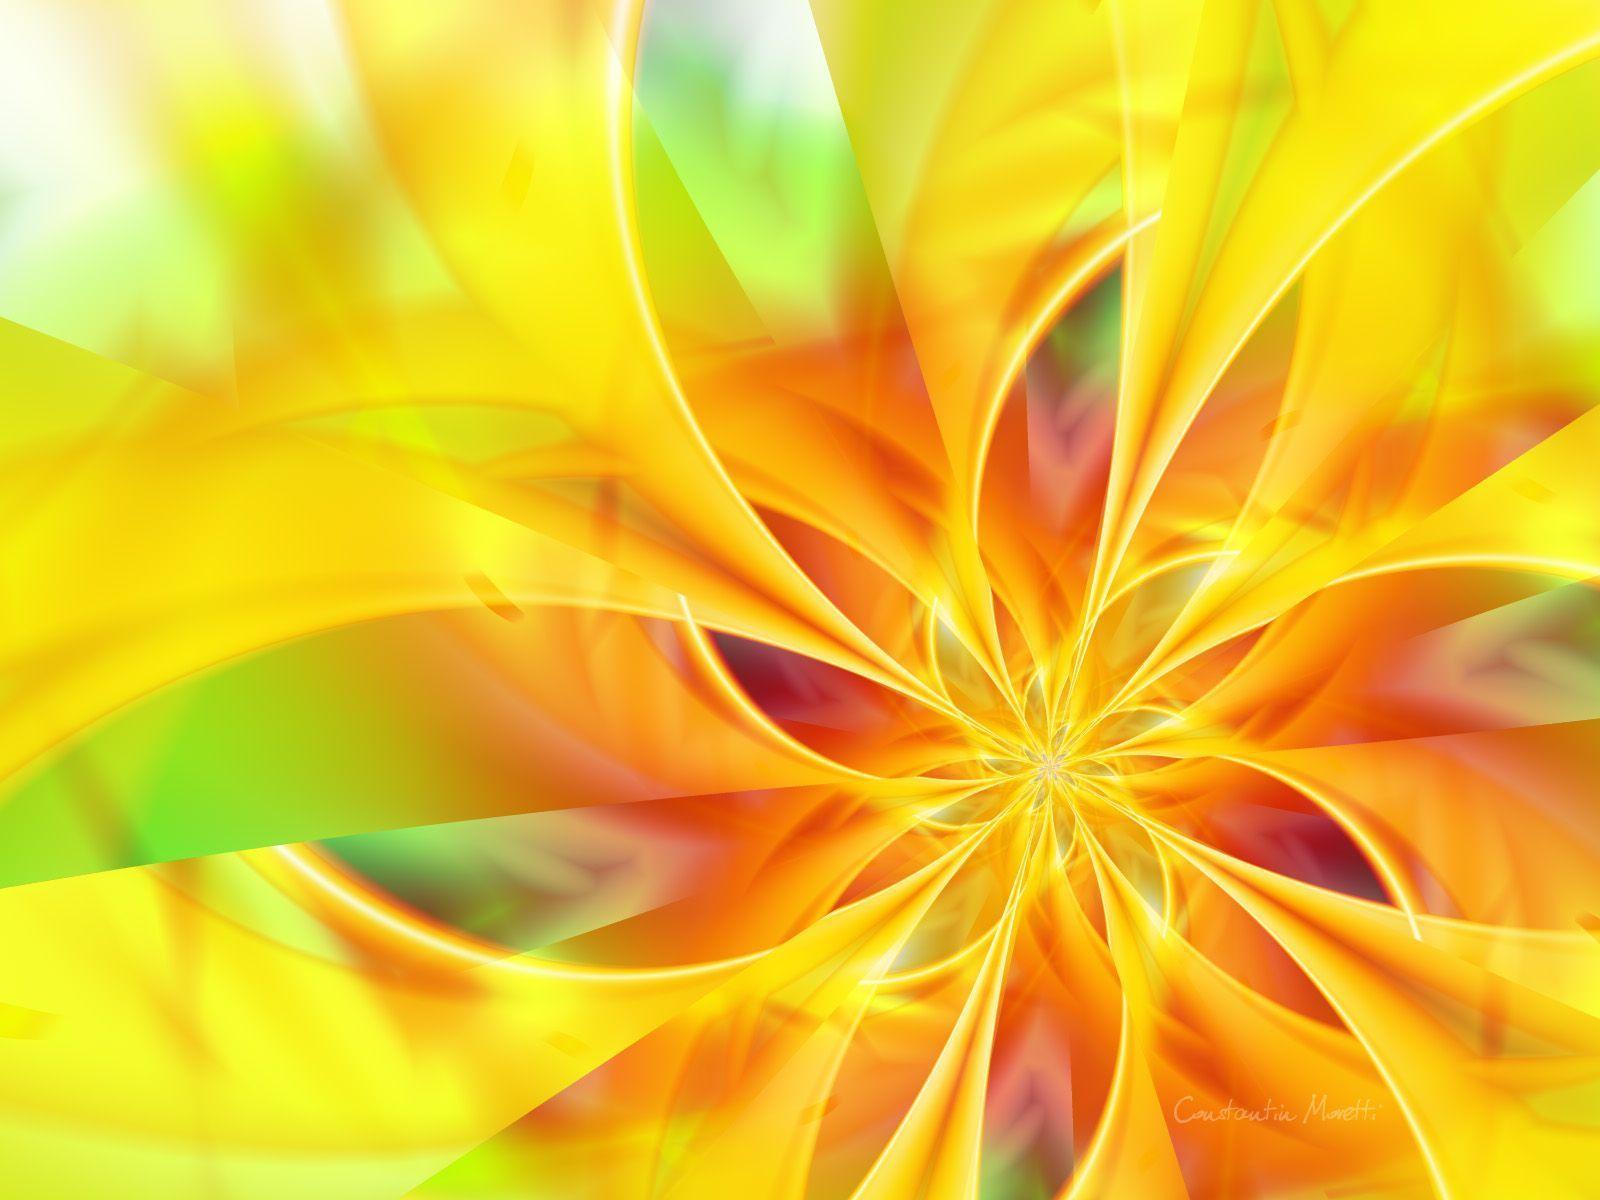 Abstract Yellow. HD wallpaper free